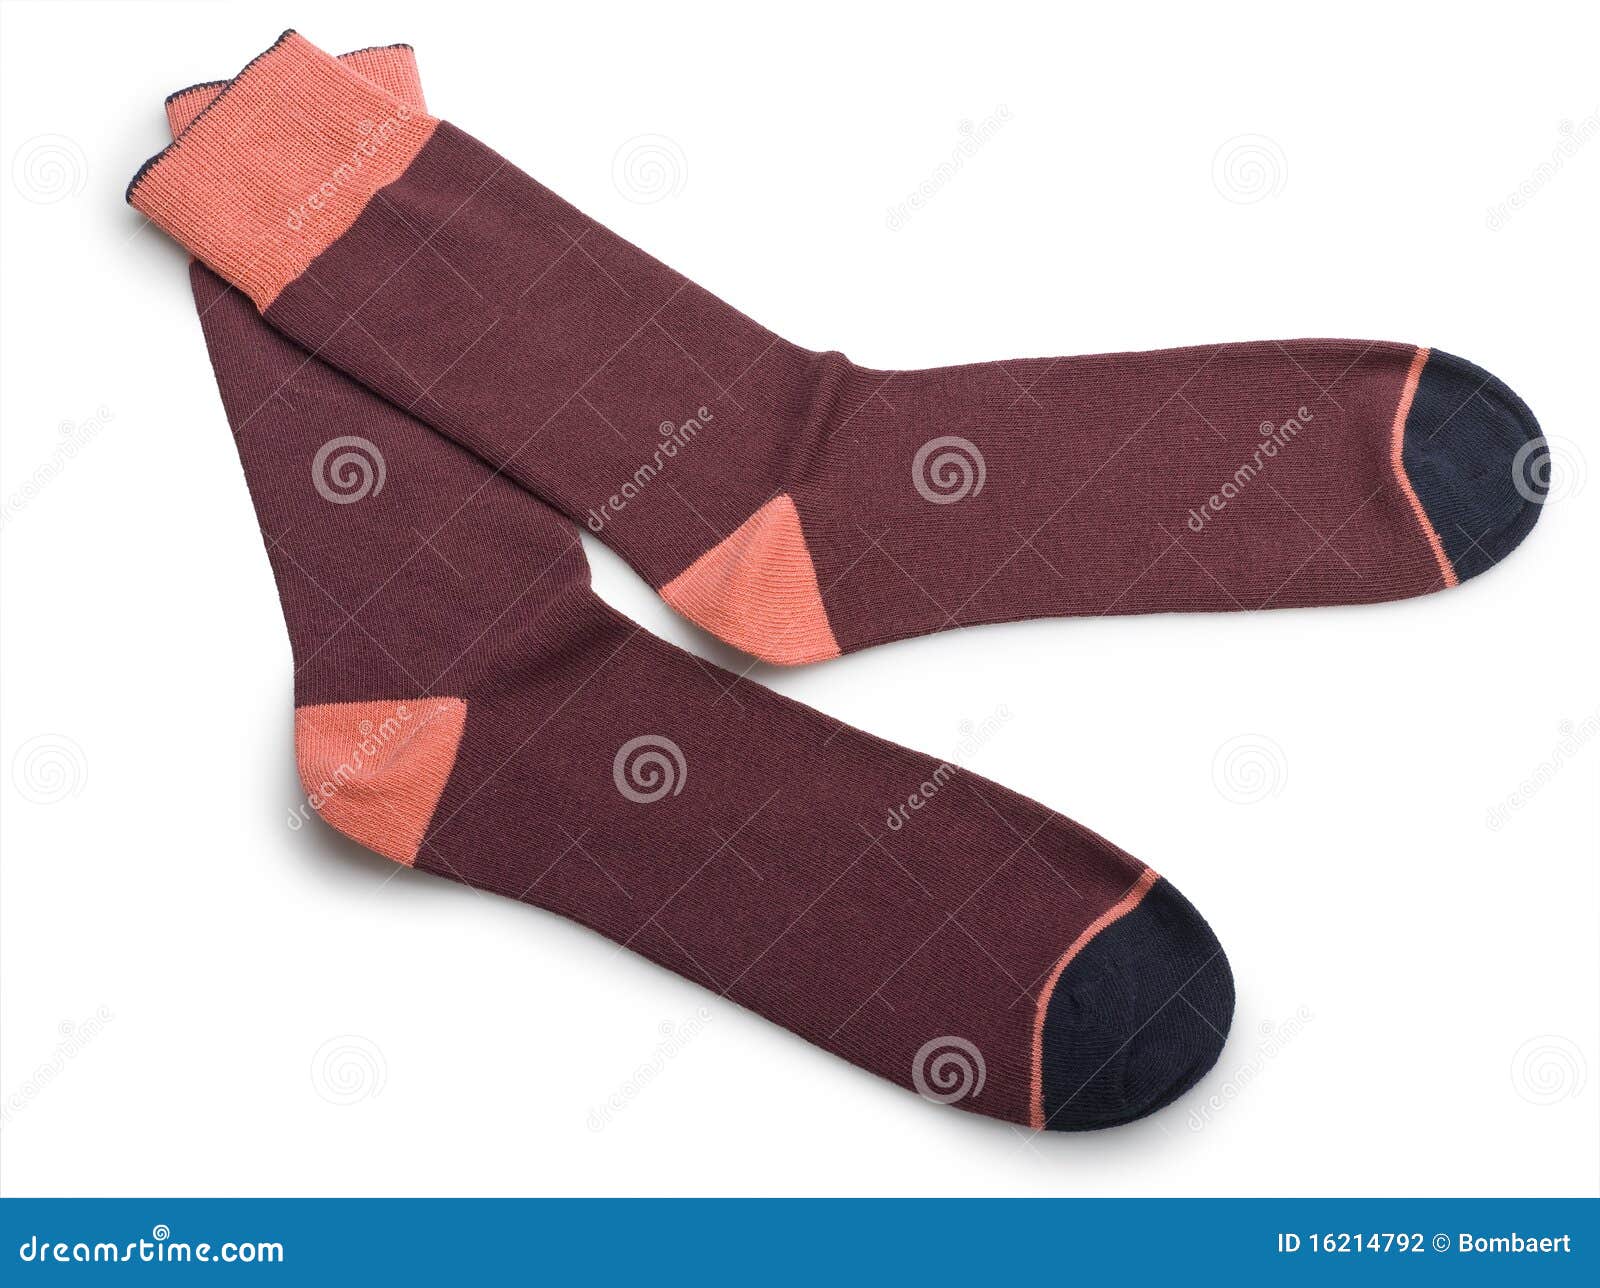 A pair of socks stock photo. Image of christmas, washing - 16214792